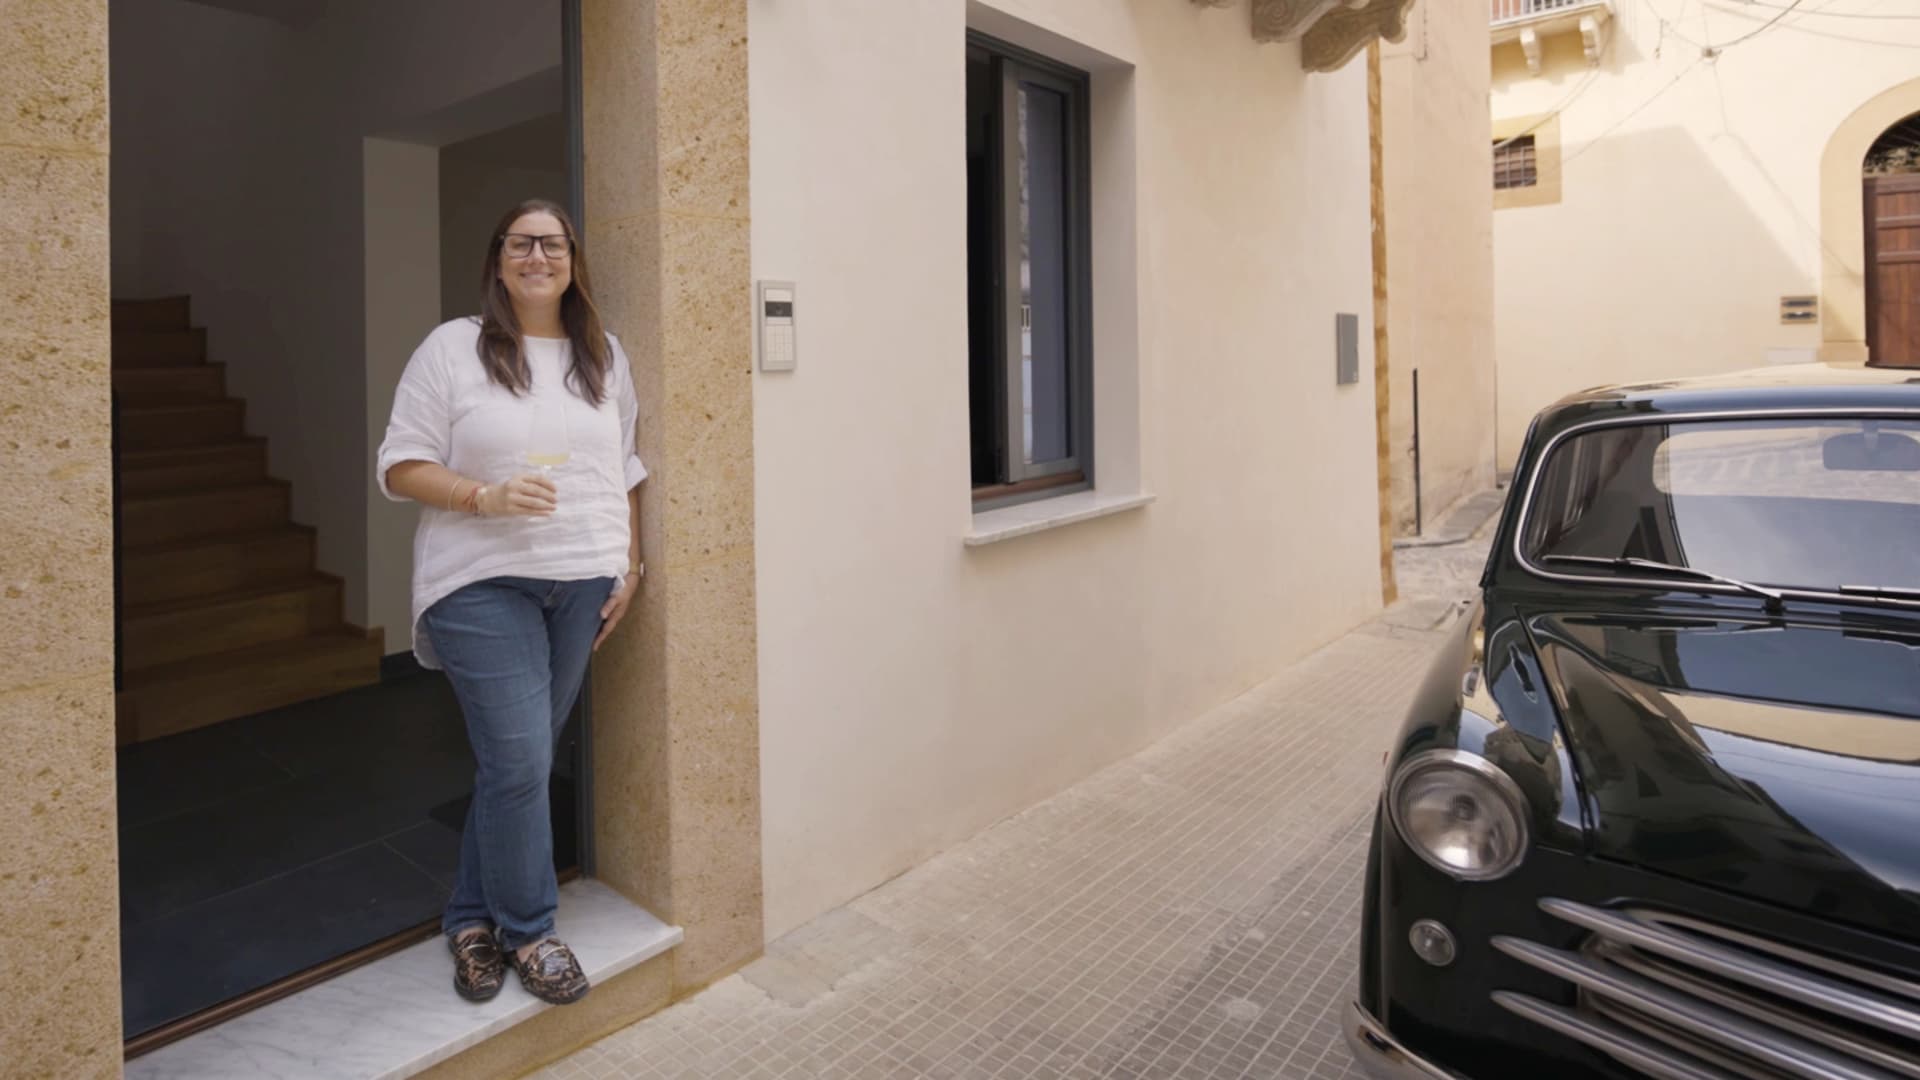 American spent 6K to renovate Italian home, found work-life balance